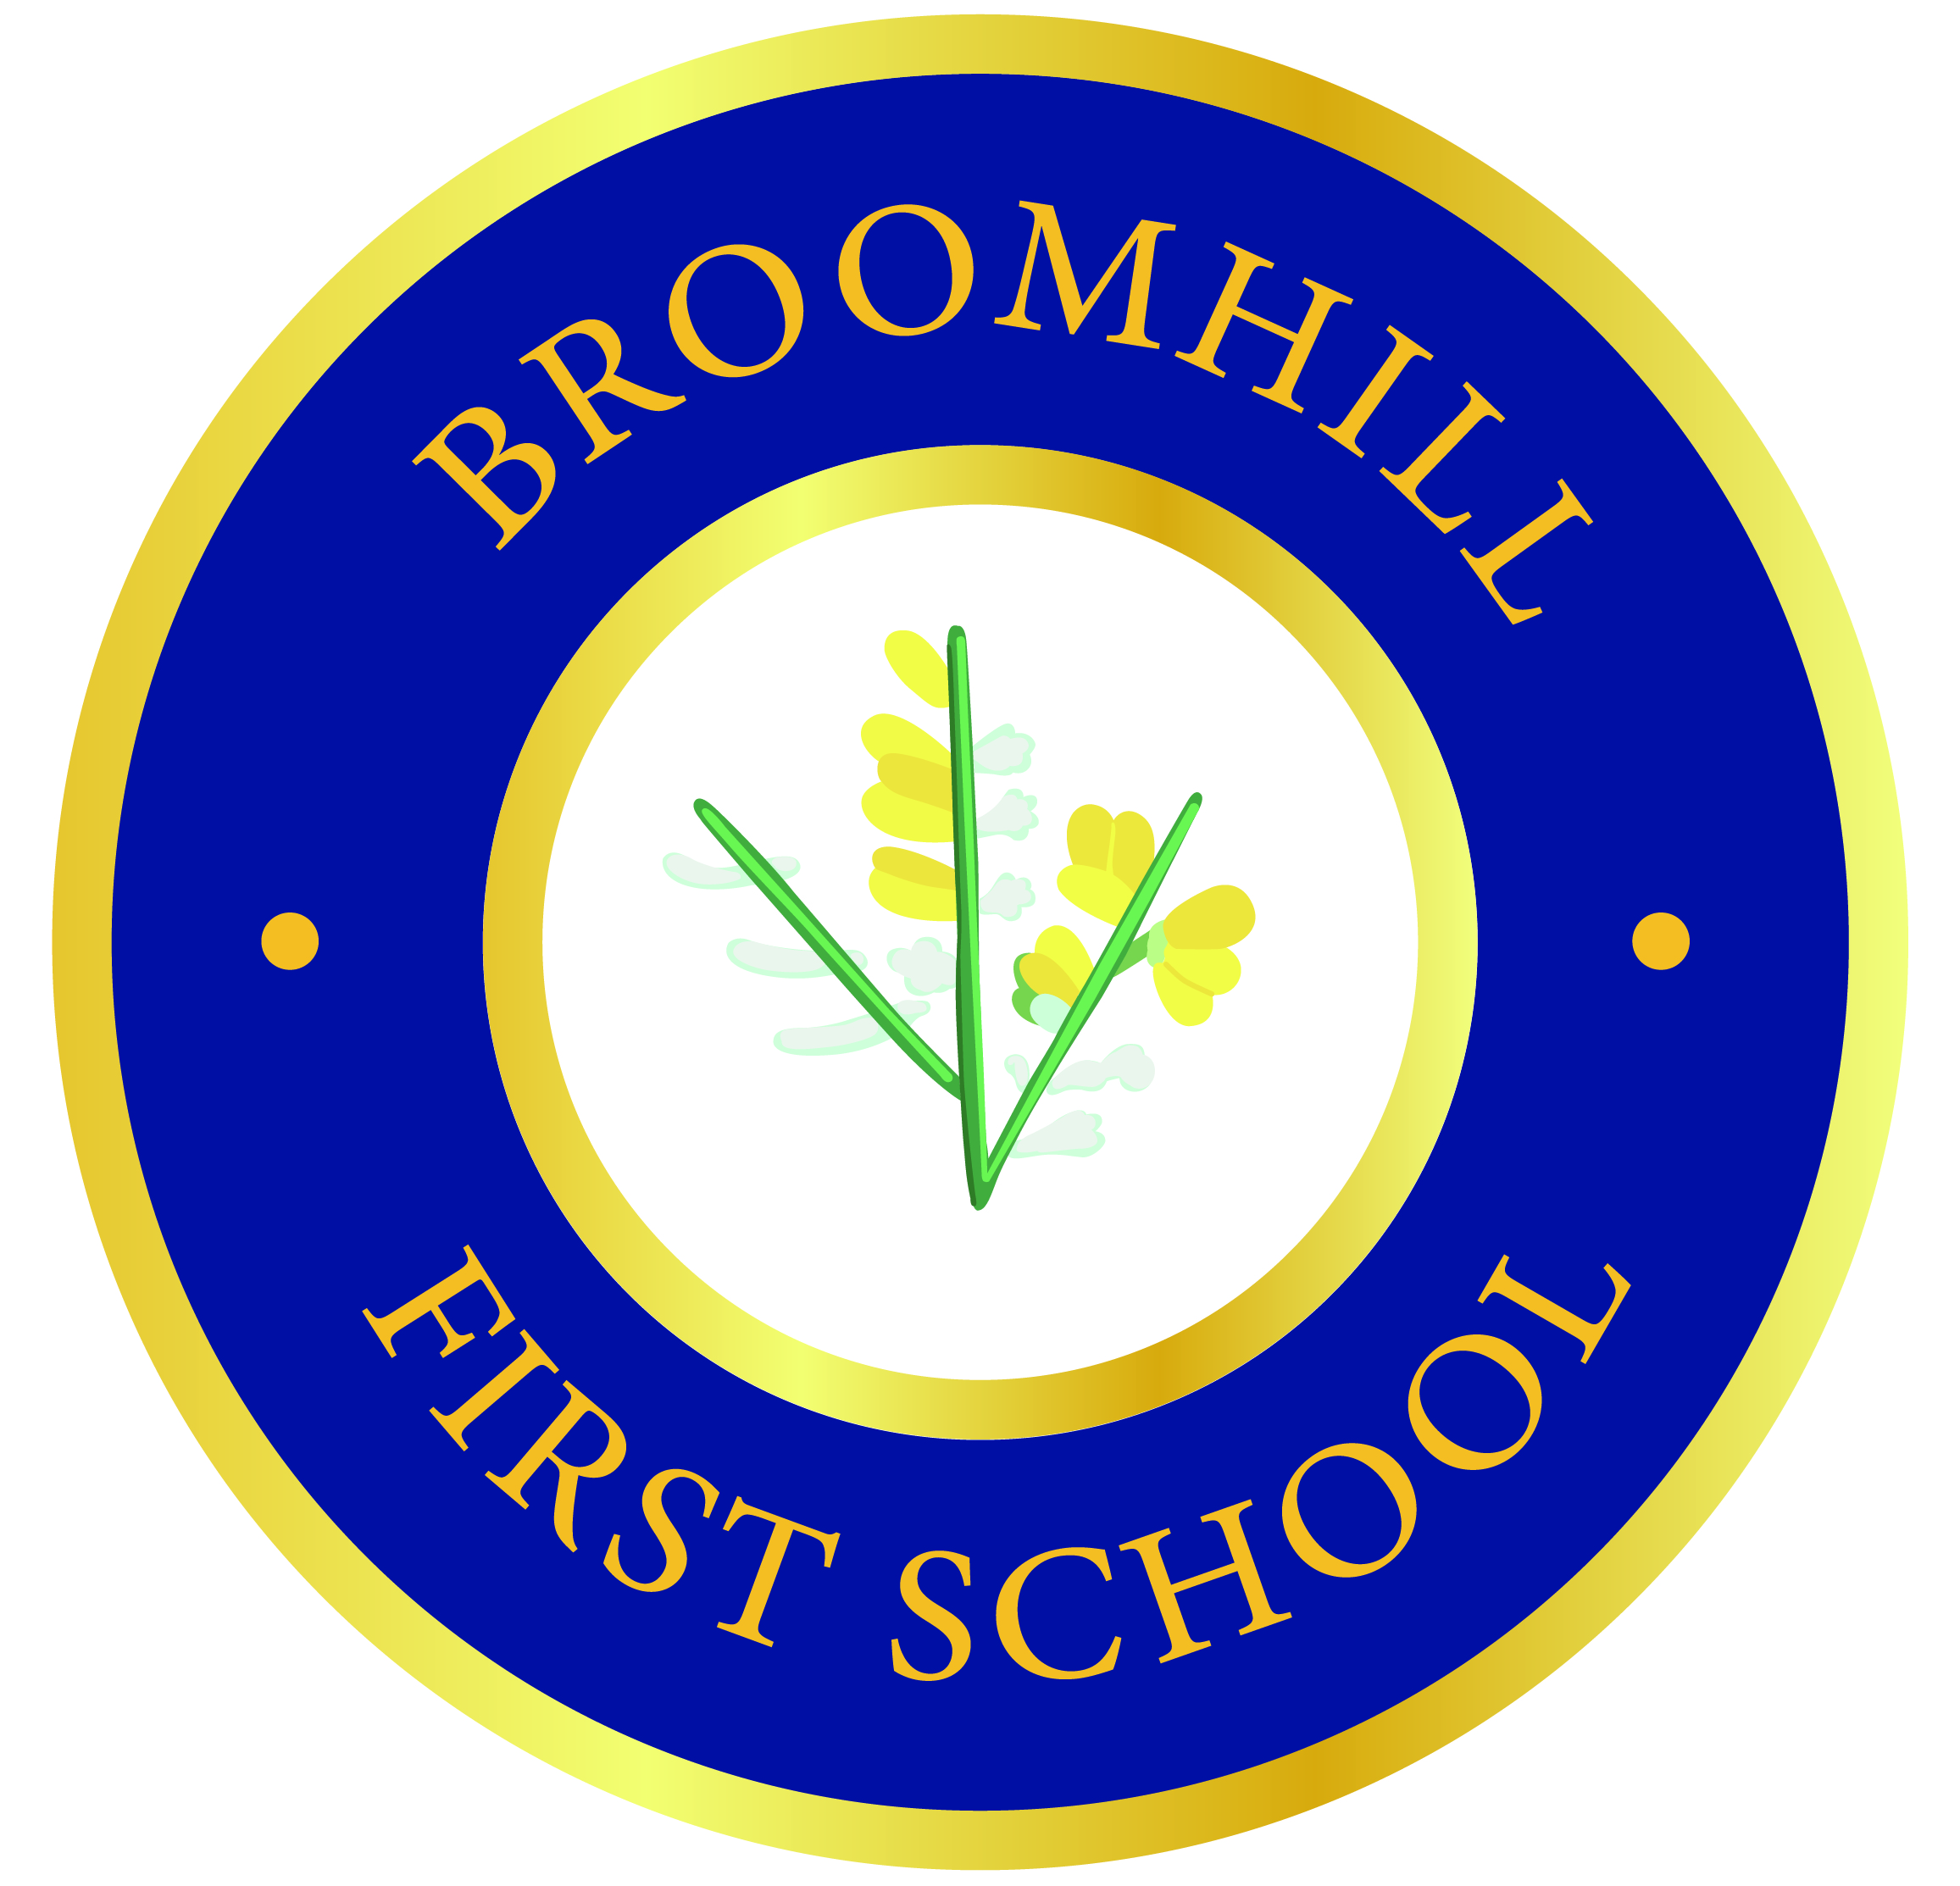 Broomhill First School (LINK)